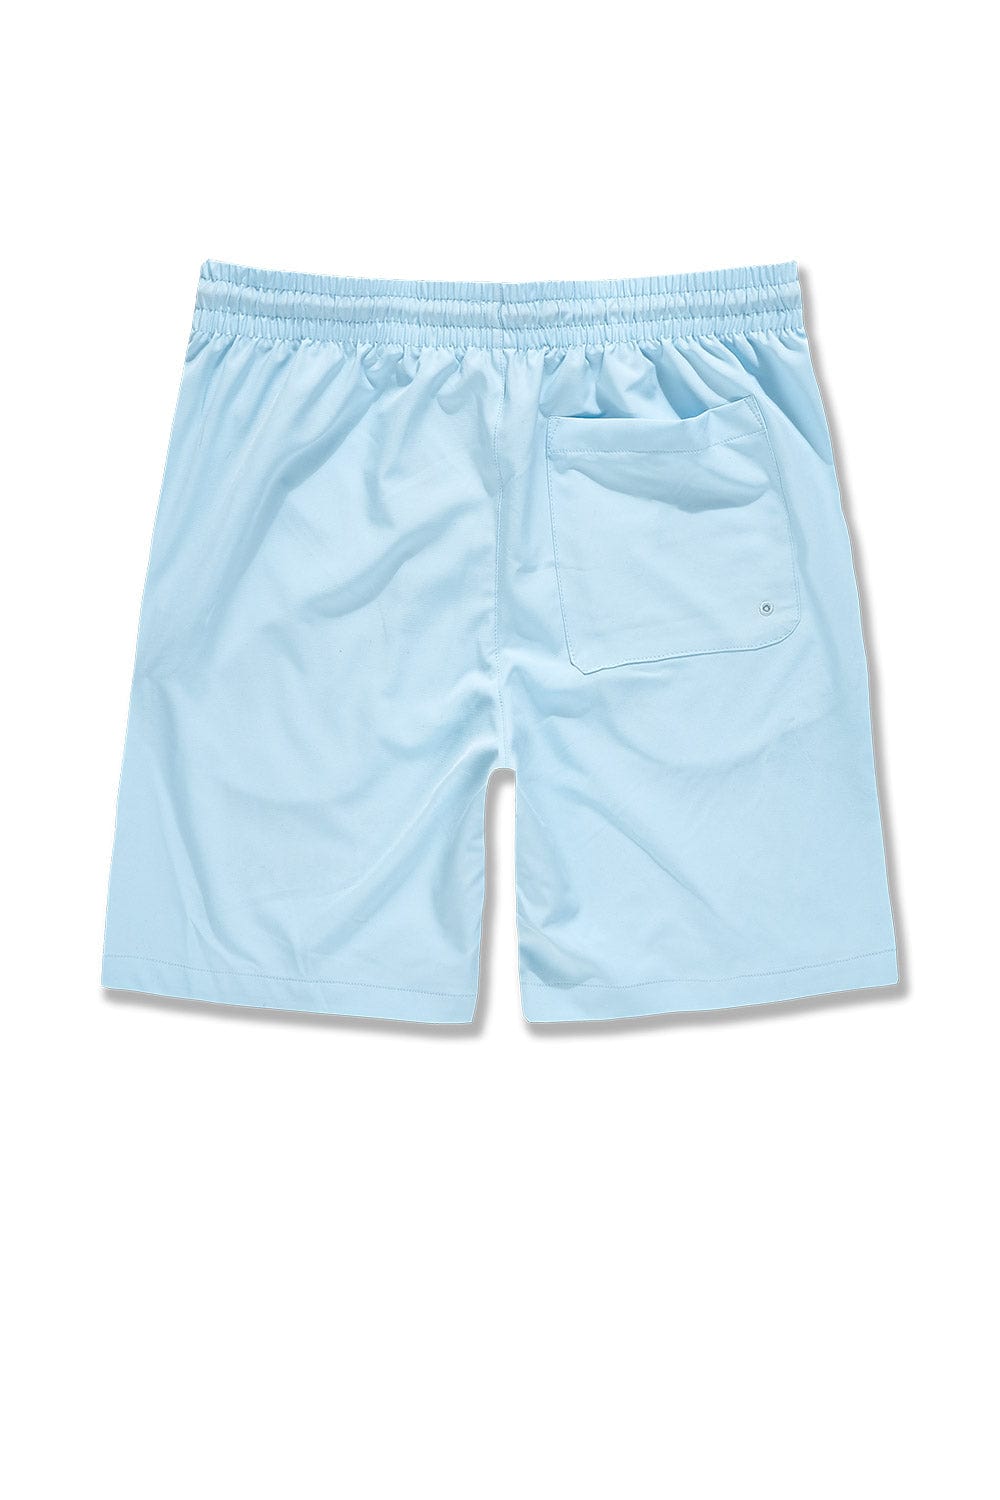 Jordan Craig Retro - Bay Area Shorts (Sky Blue)